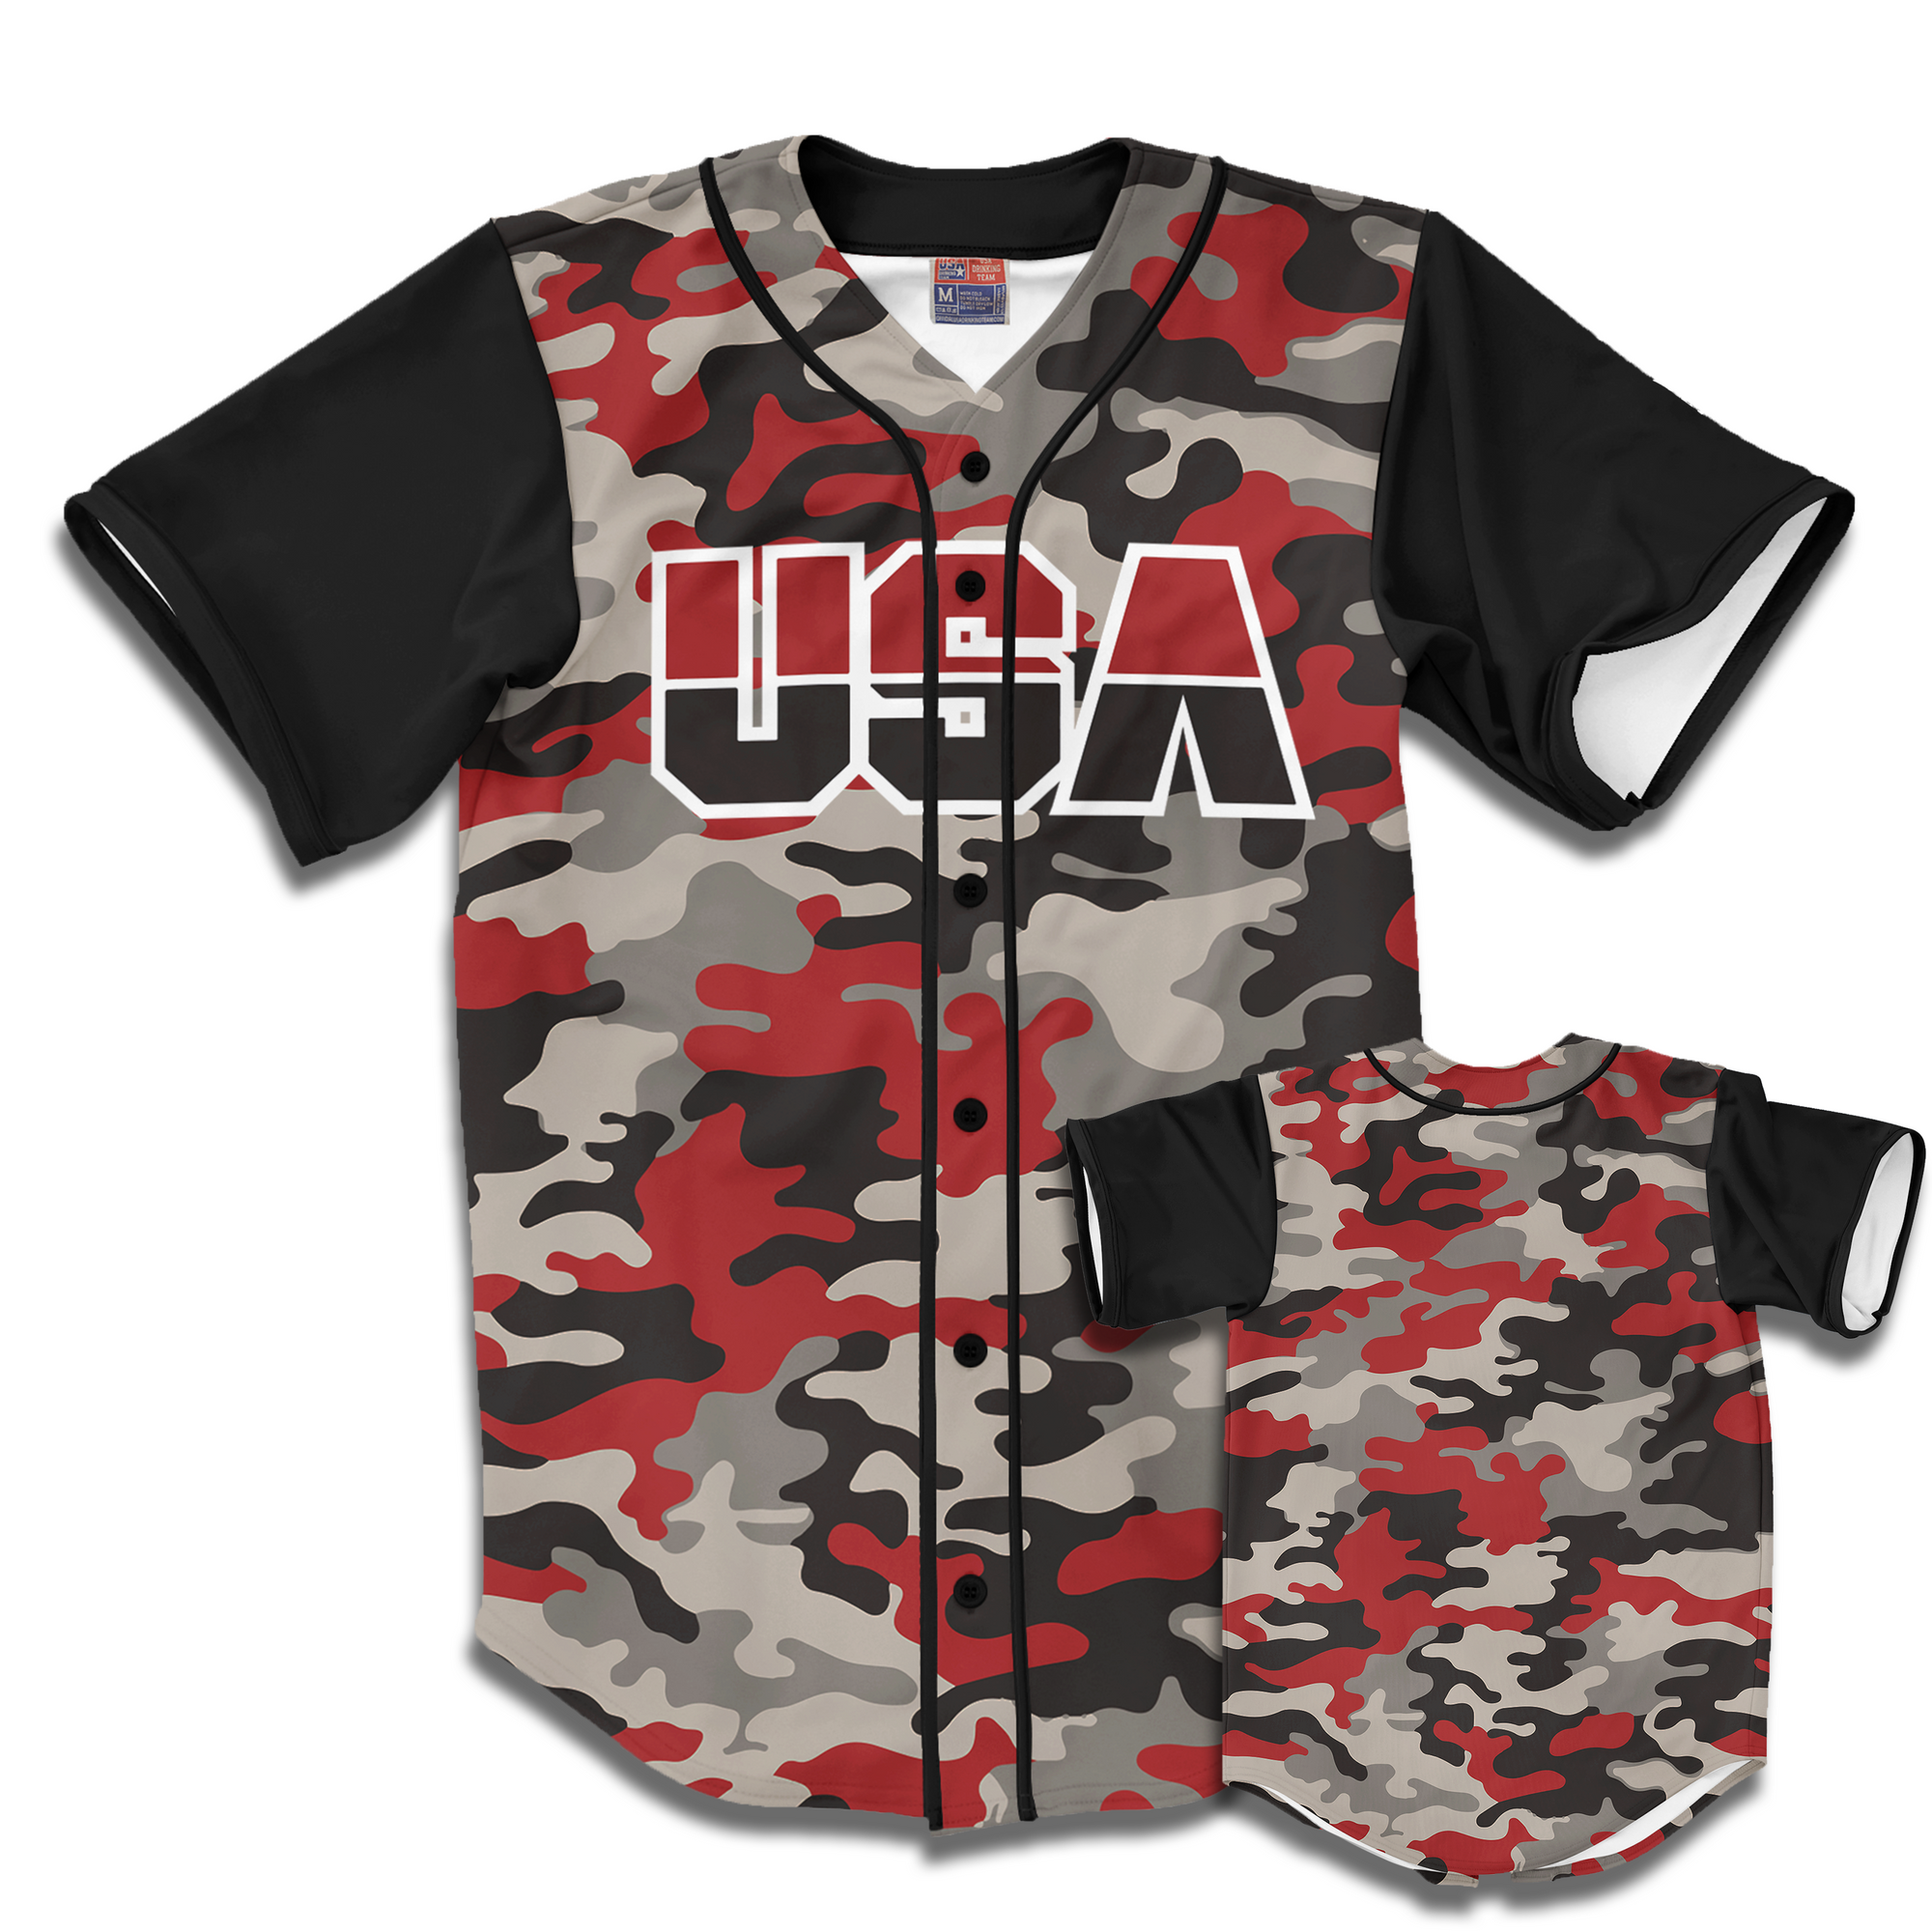 USA Baseball Jersey Camo (Red) - USA Drinking Team